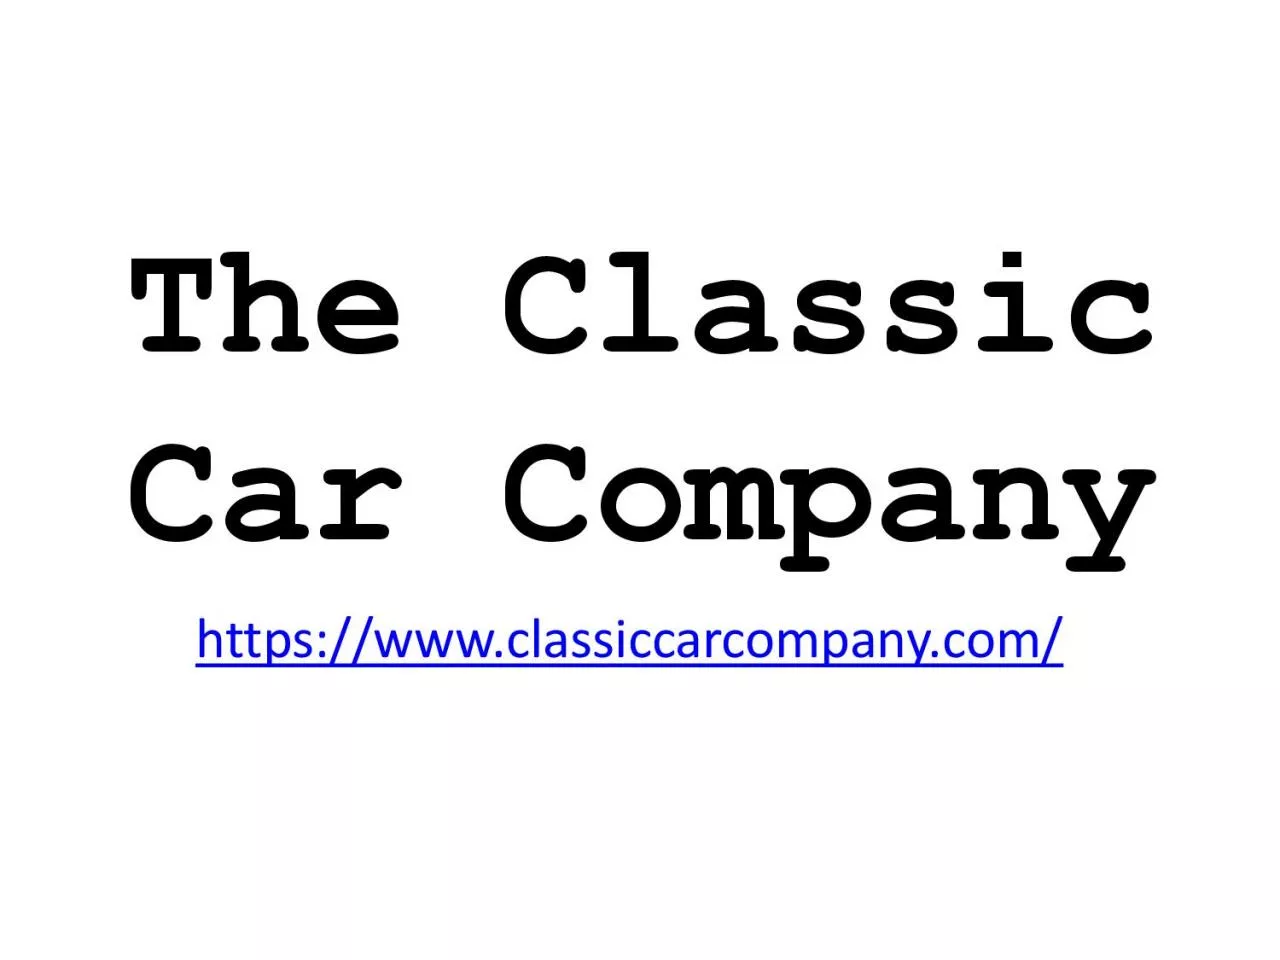 The Classic Car Company